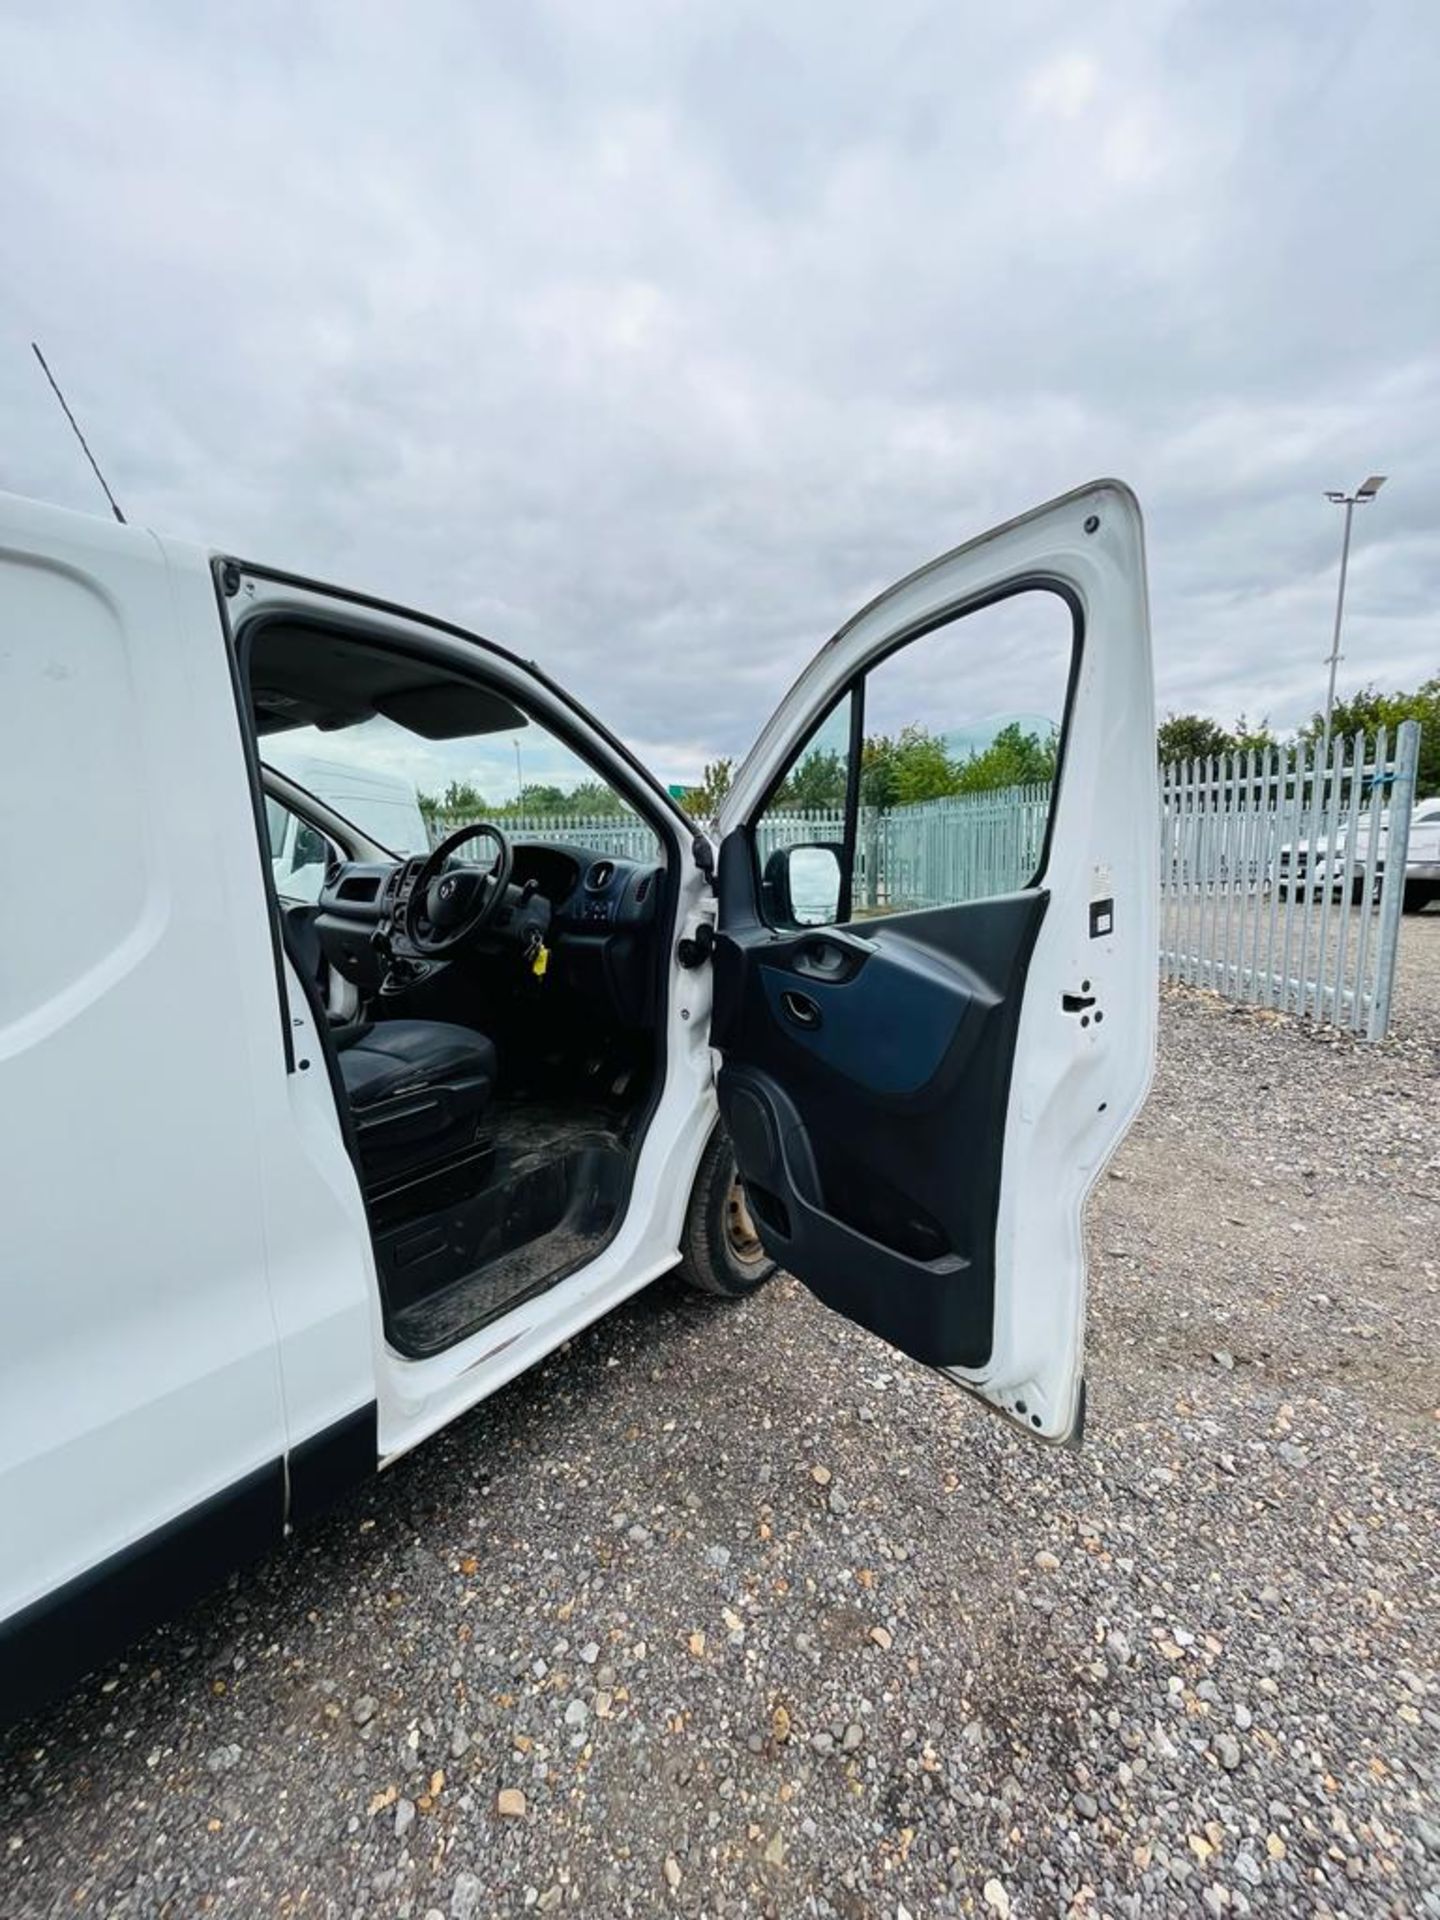 ** ON SALE ** Vauxhall Vivaro 1.6 CDTI 115 L2 H1 2900 2015 '15 Reg' Panel Van - No Vat - Image 12 of 24